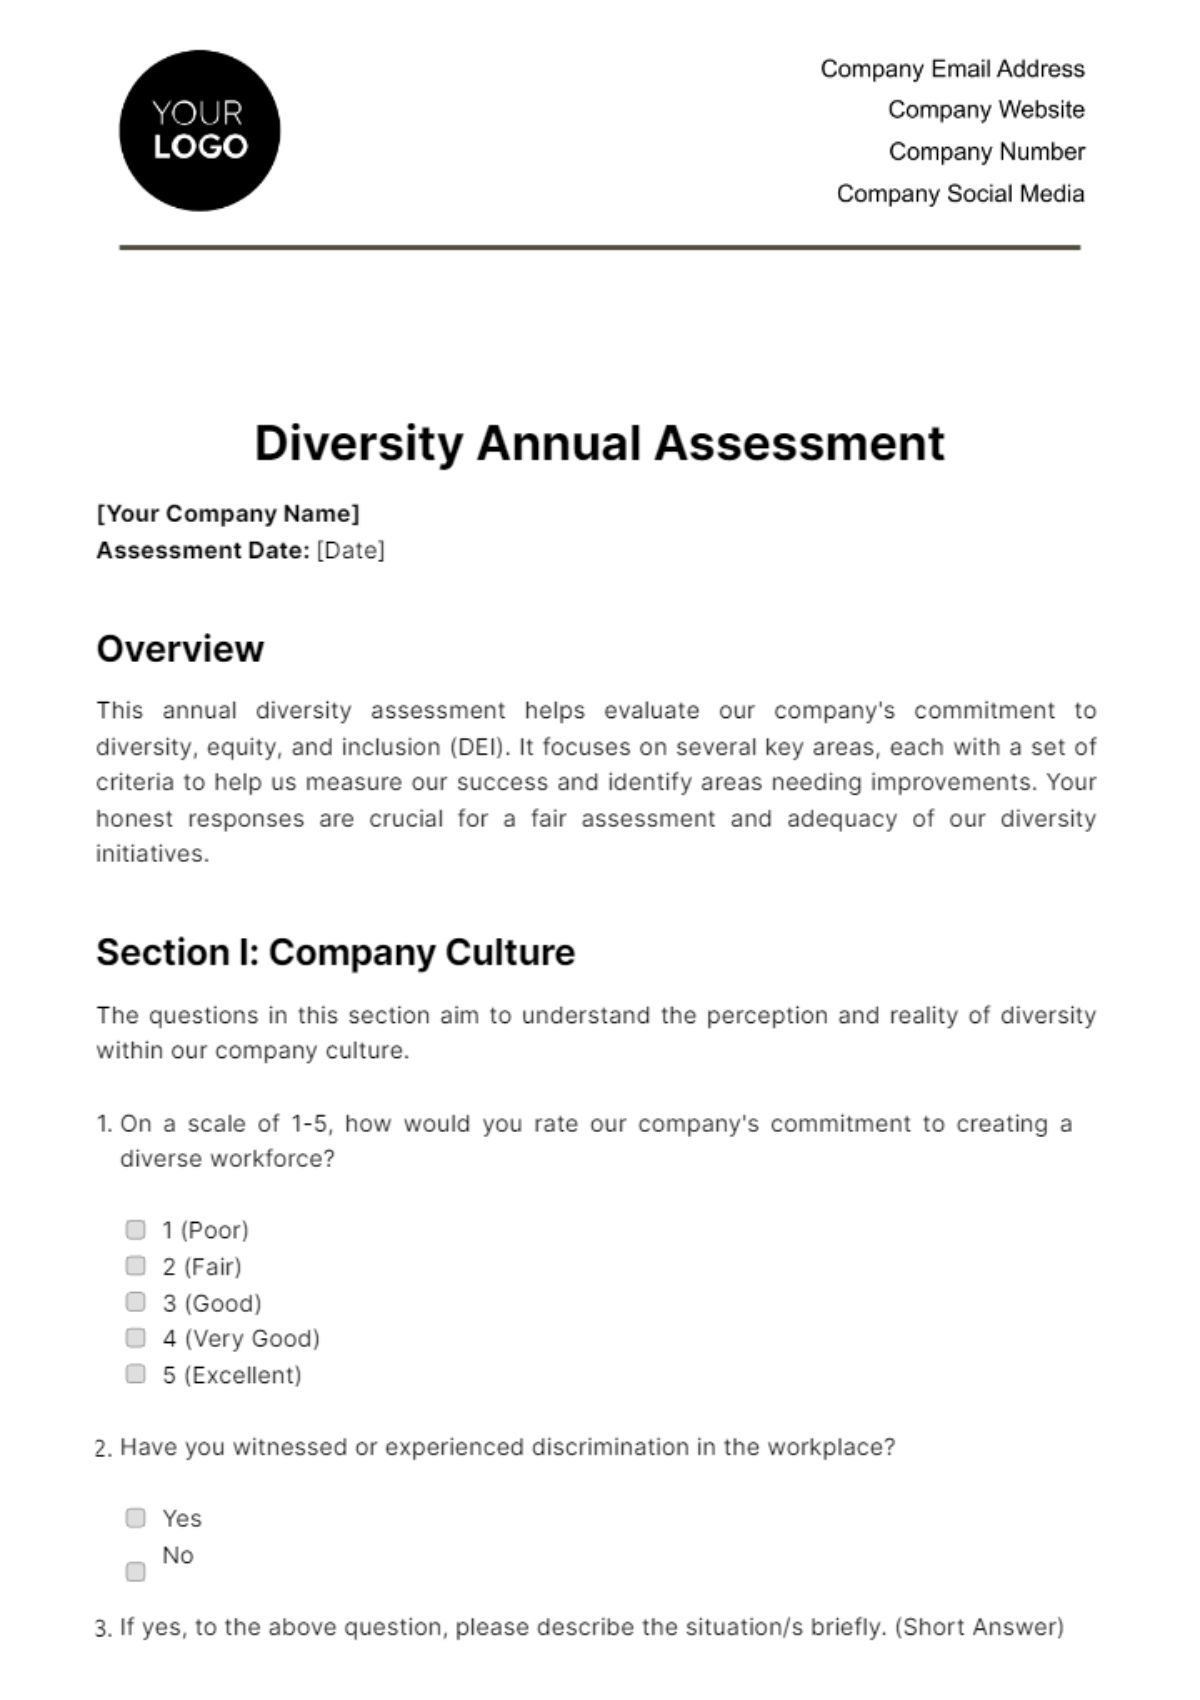 Diversity Annual Assessment HR Template